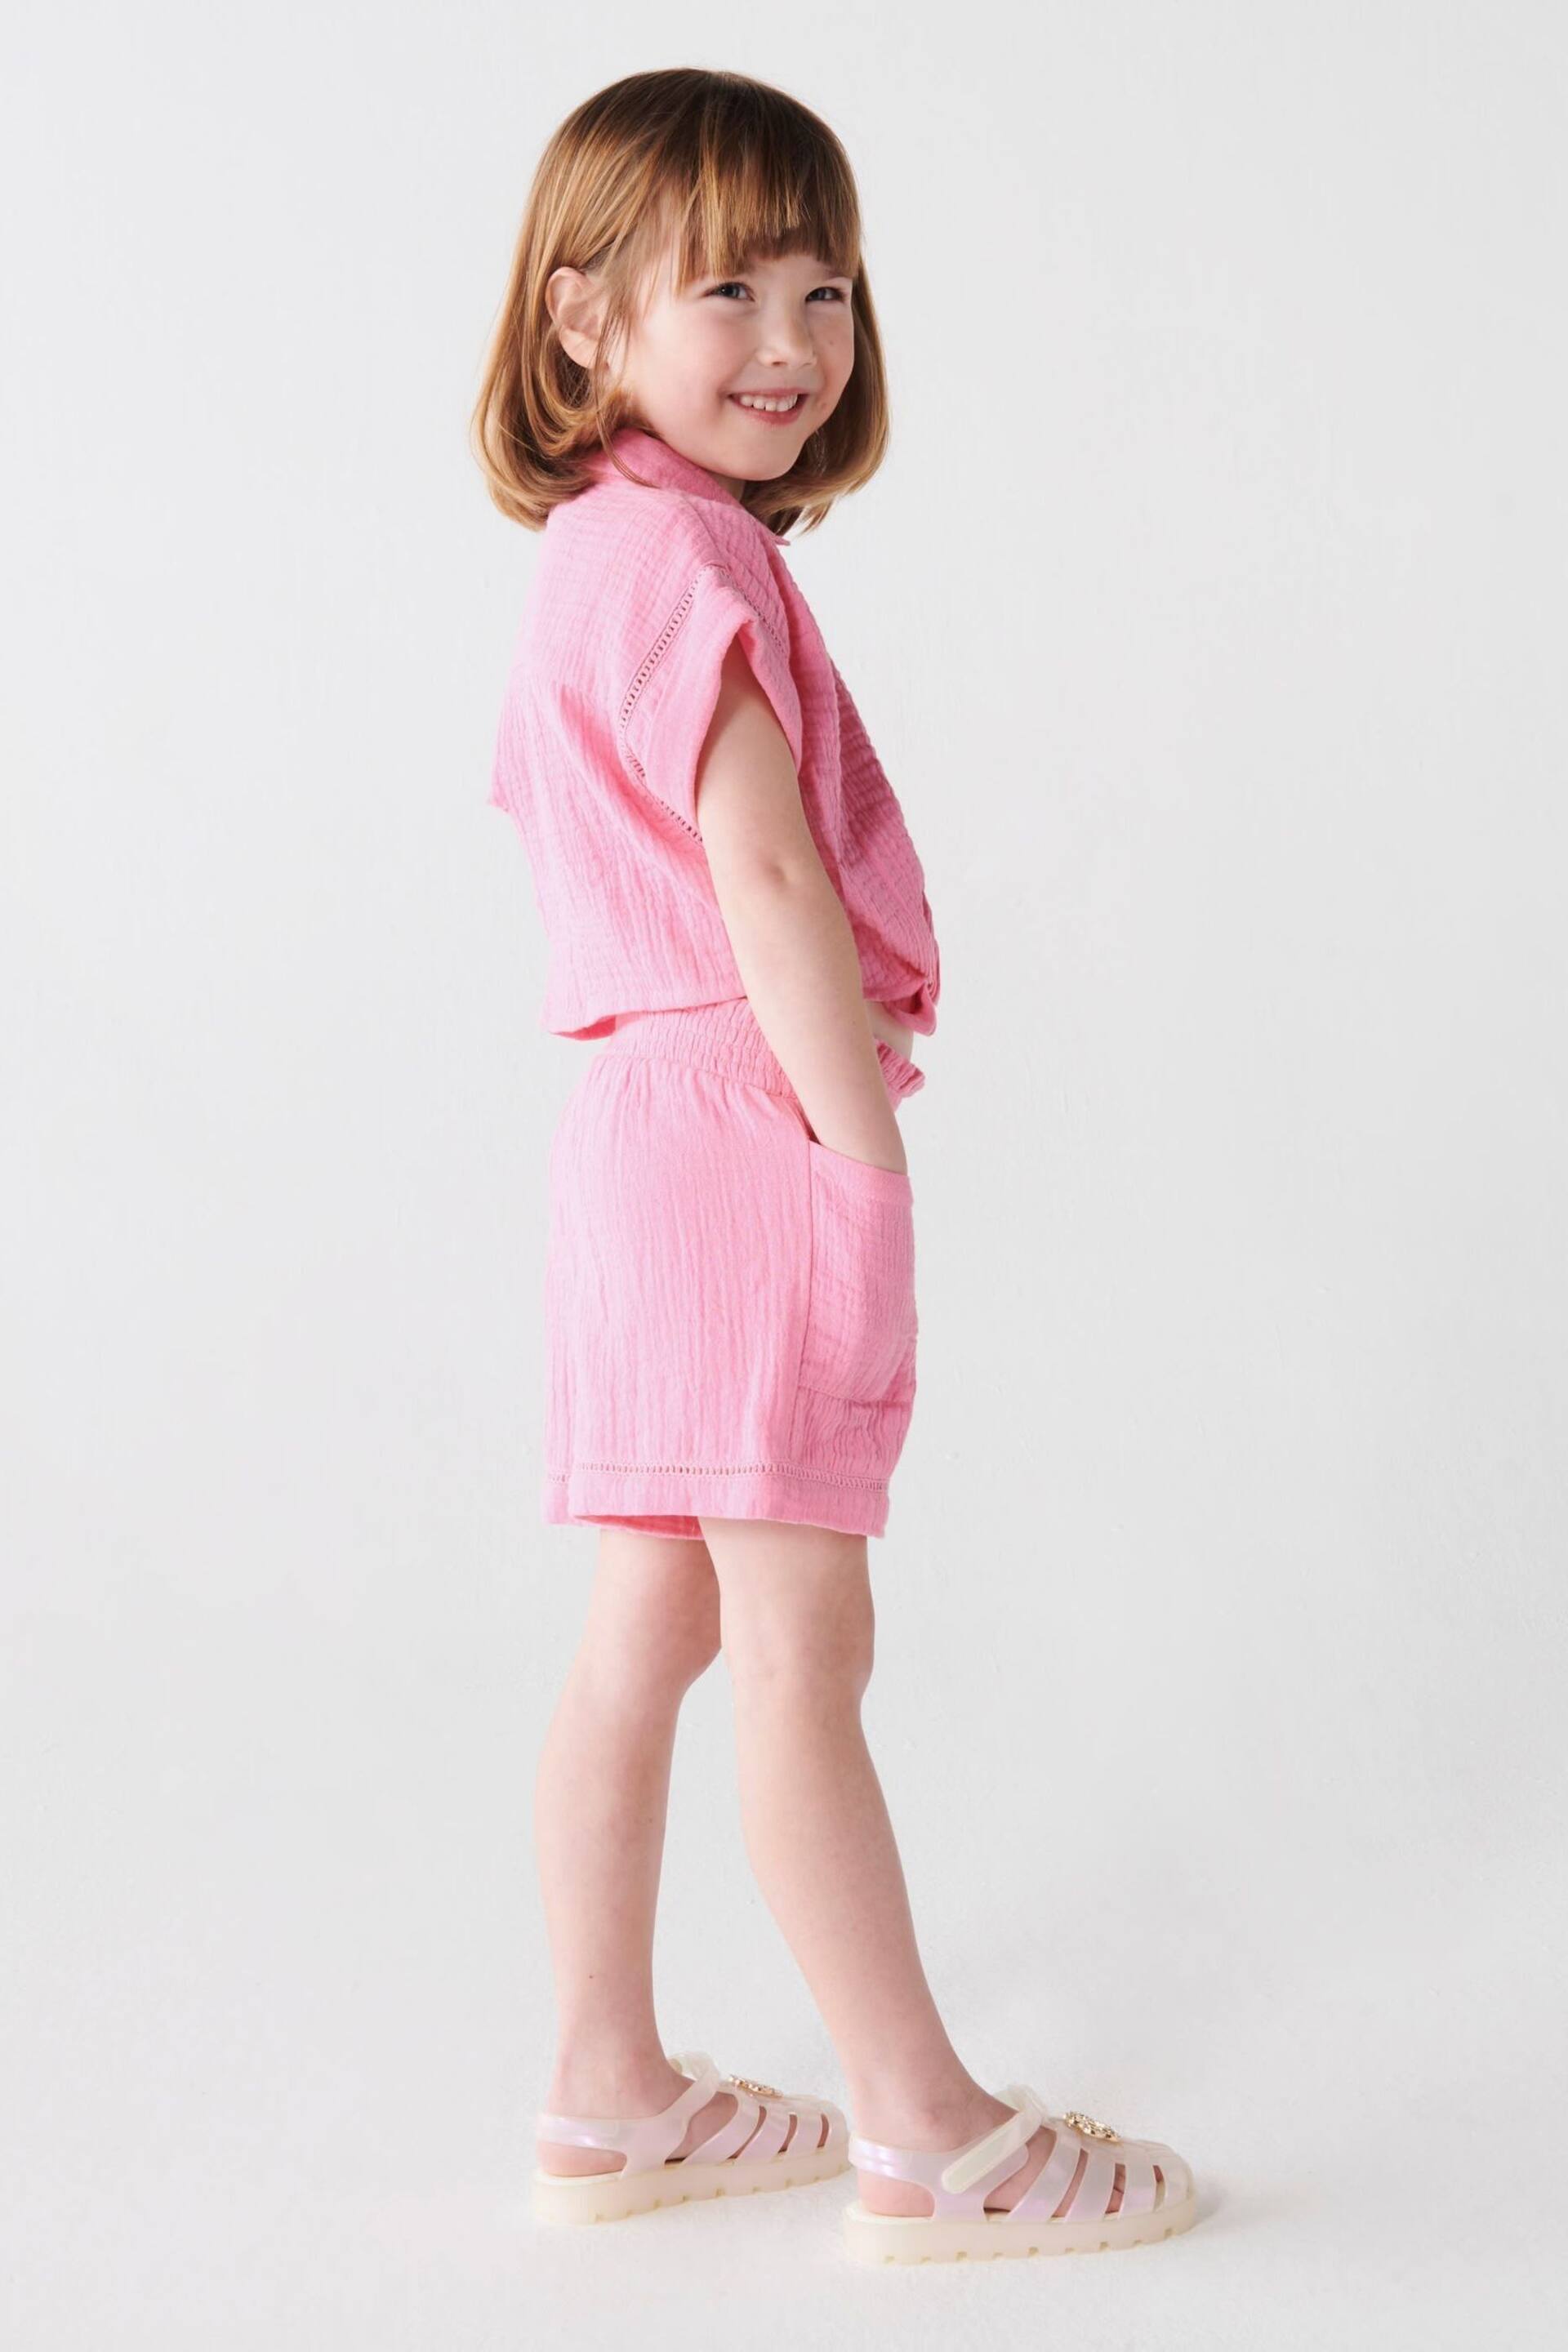 River Island Pink Girls Shirt and Shorts Set - Image 2 of 3